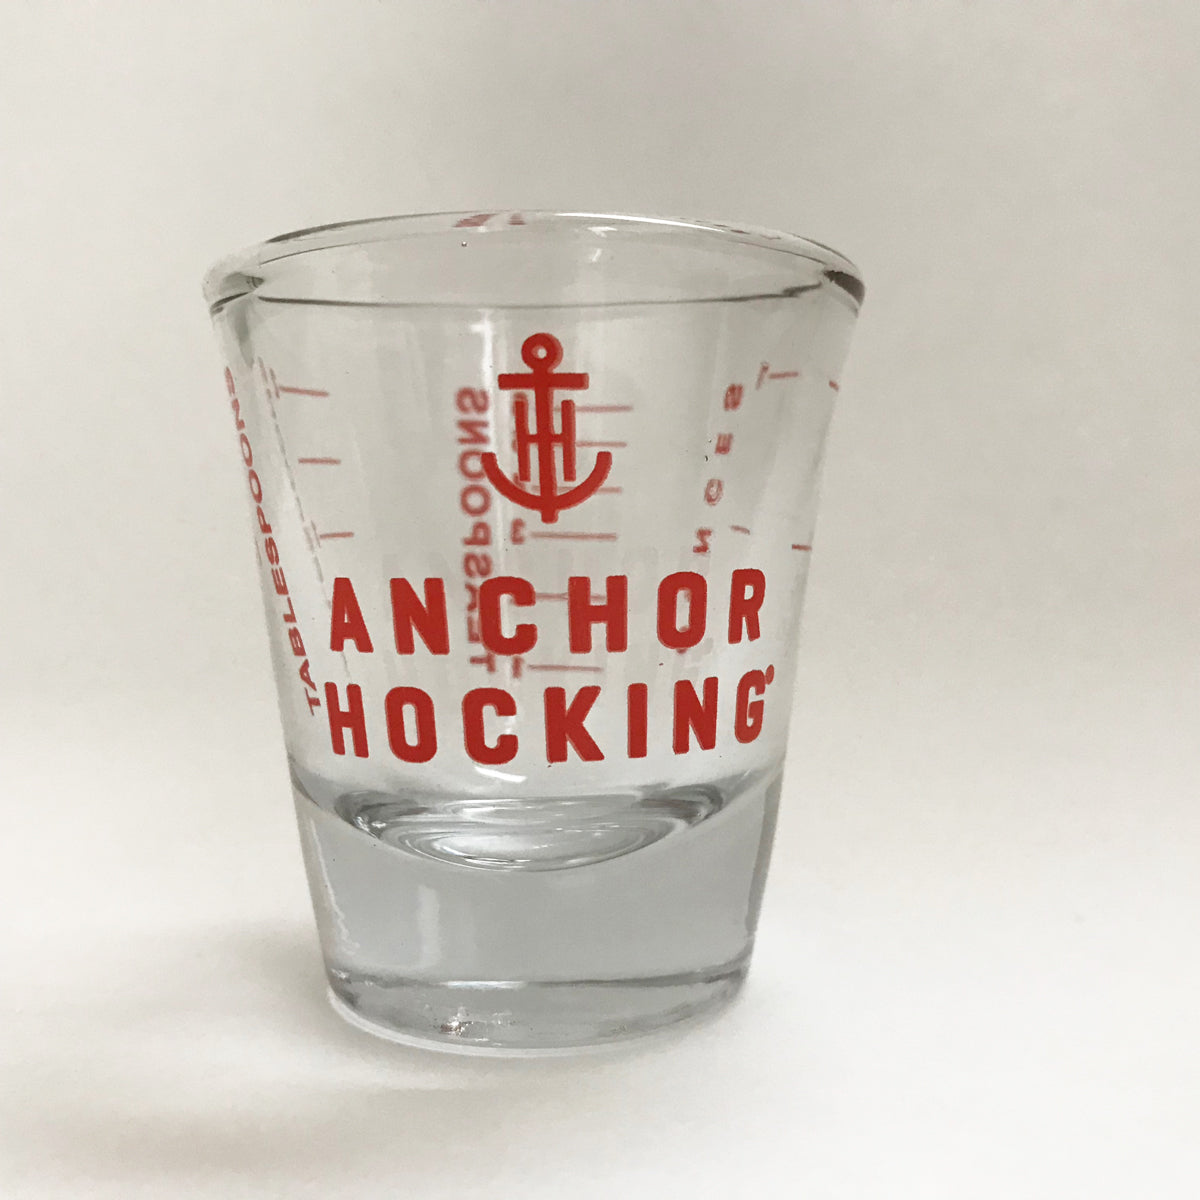 Anchor Hocking Measuring Glass, 5 Oz.